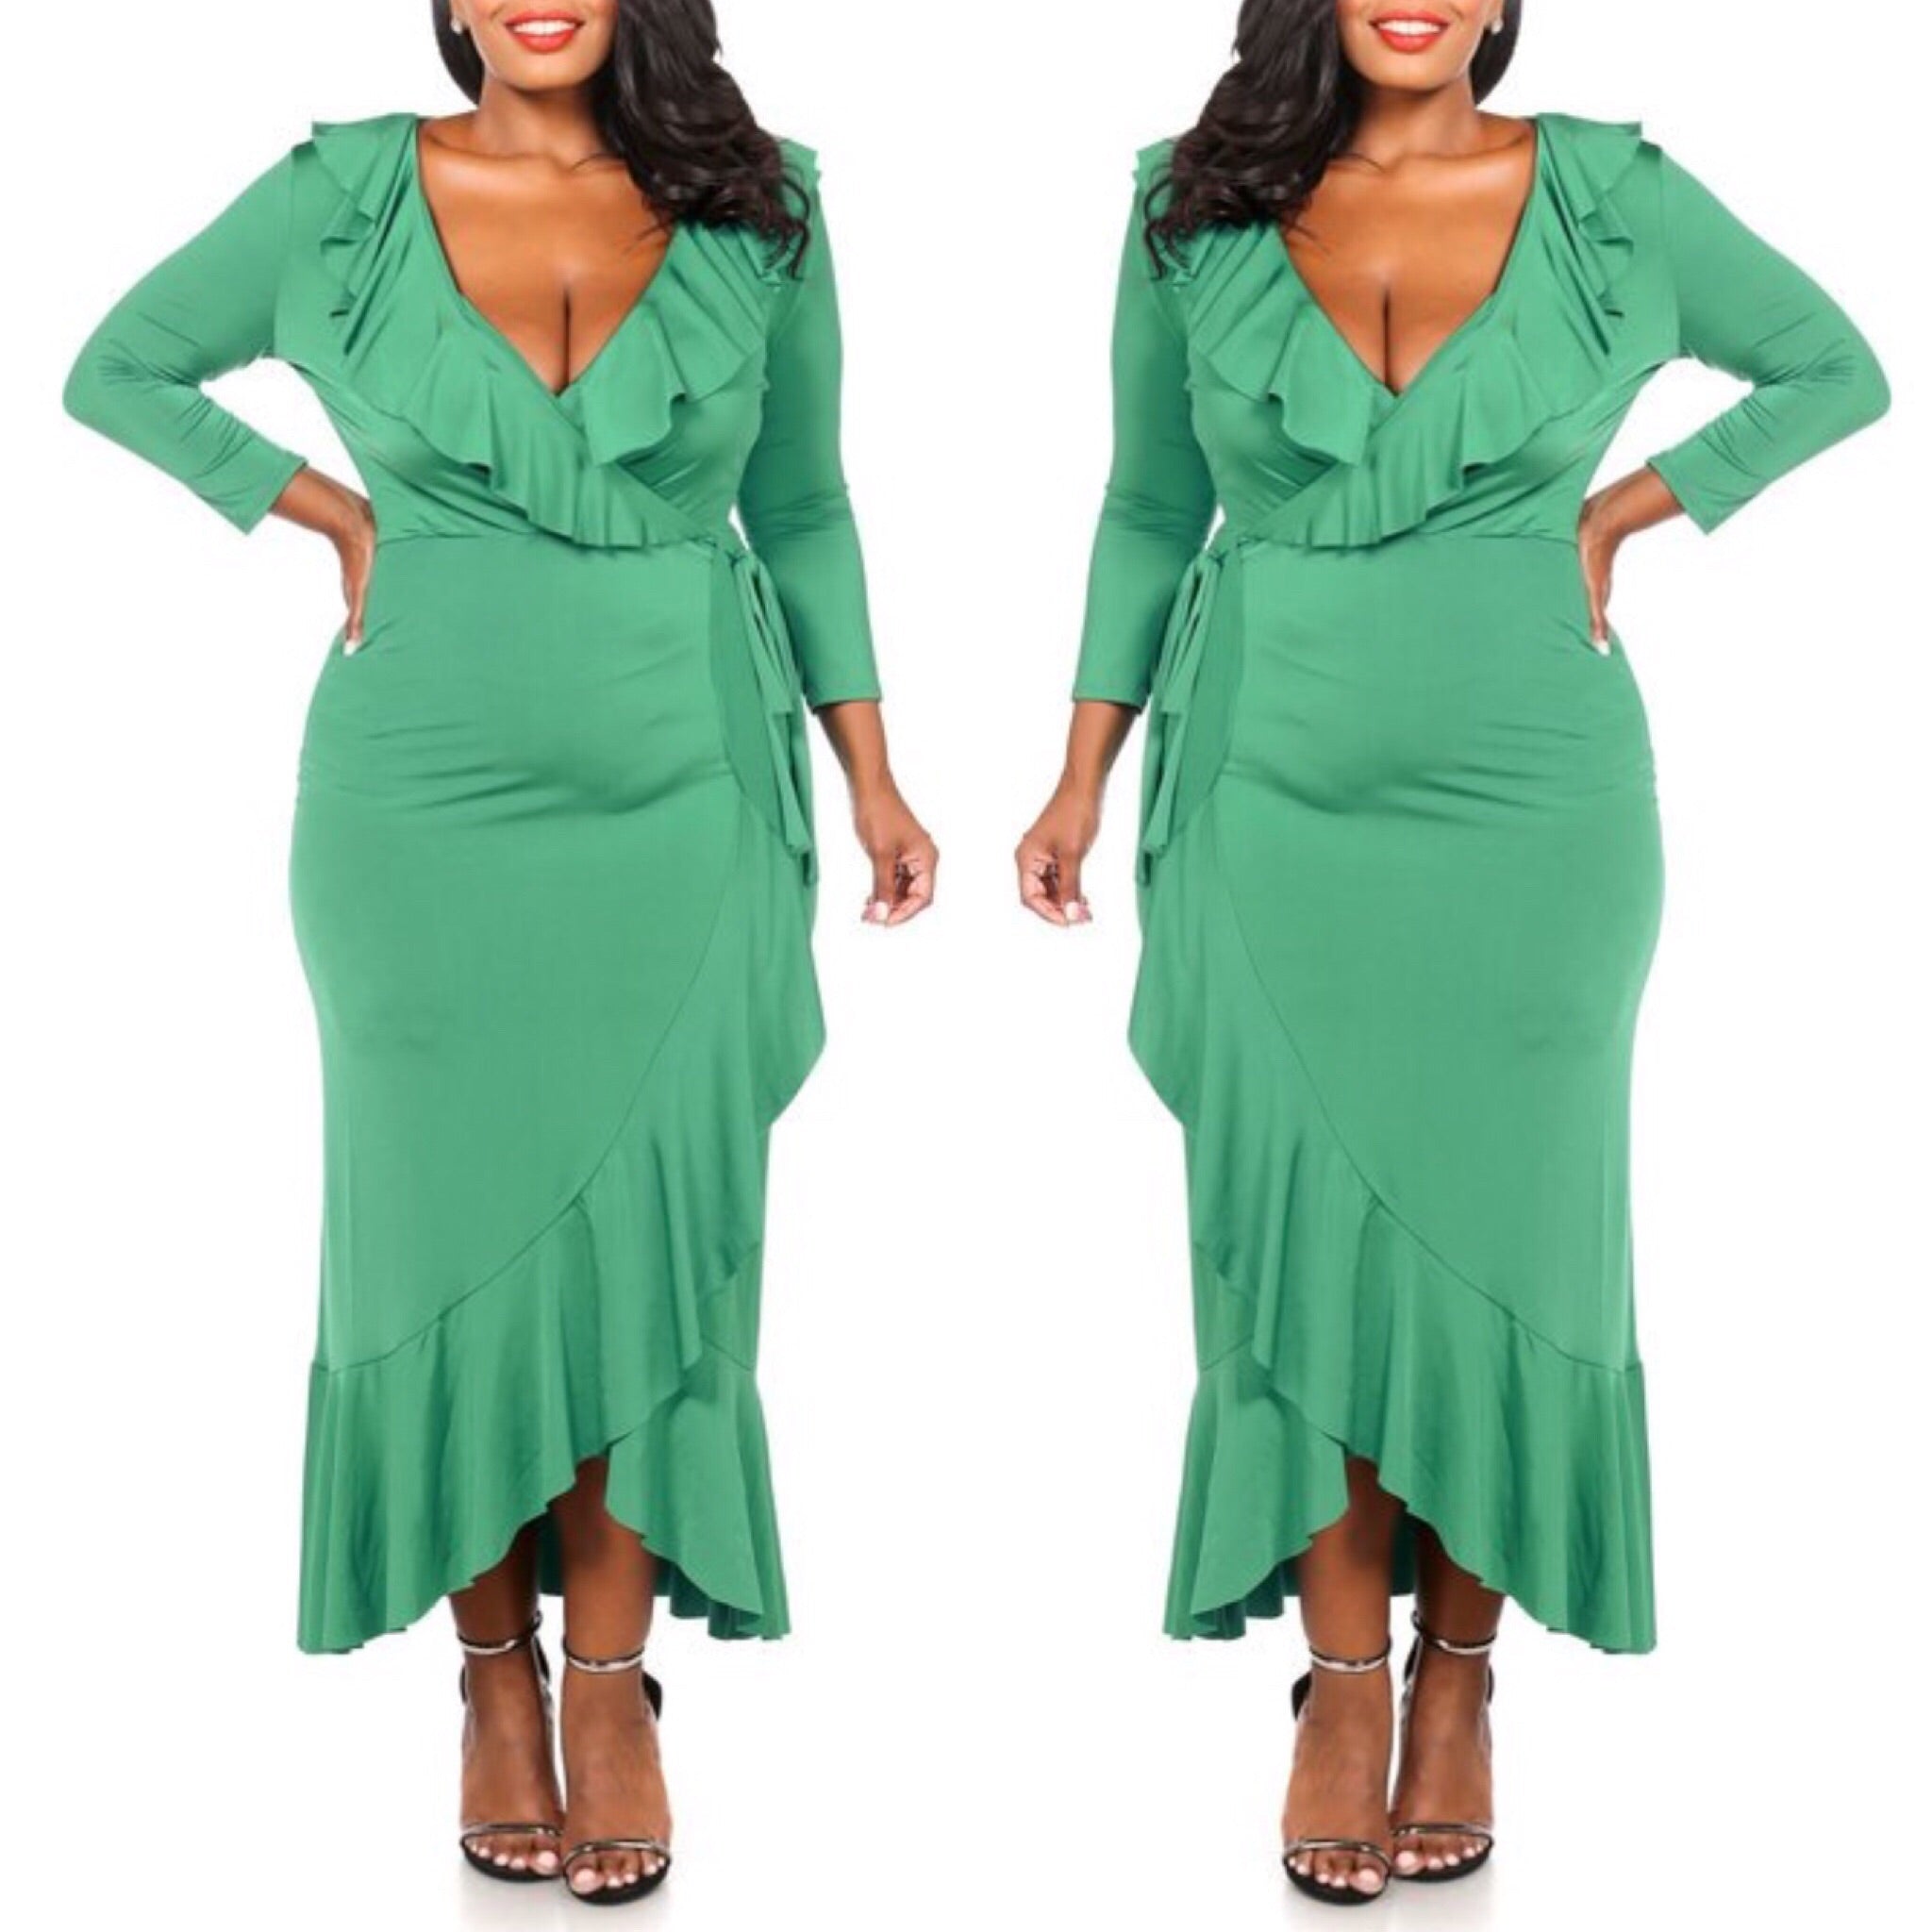 Beverly Ruffle Maxi Dress (Green) - Plus Size